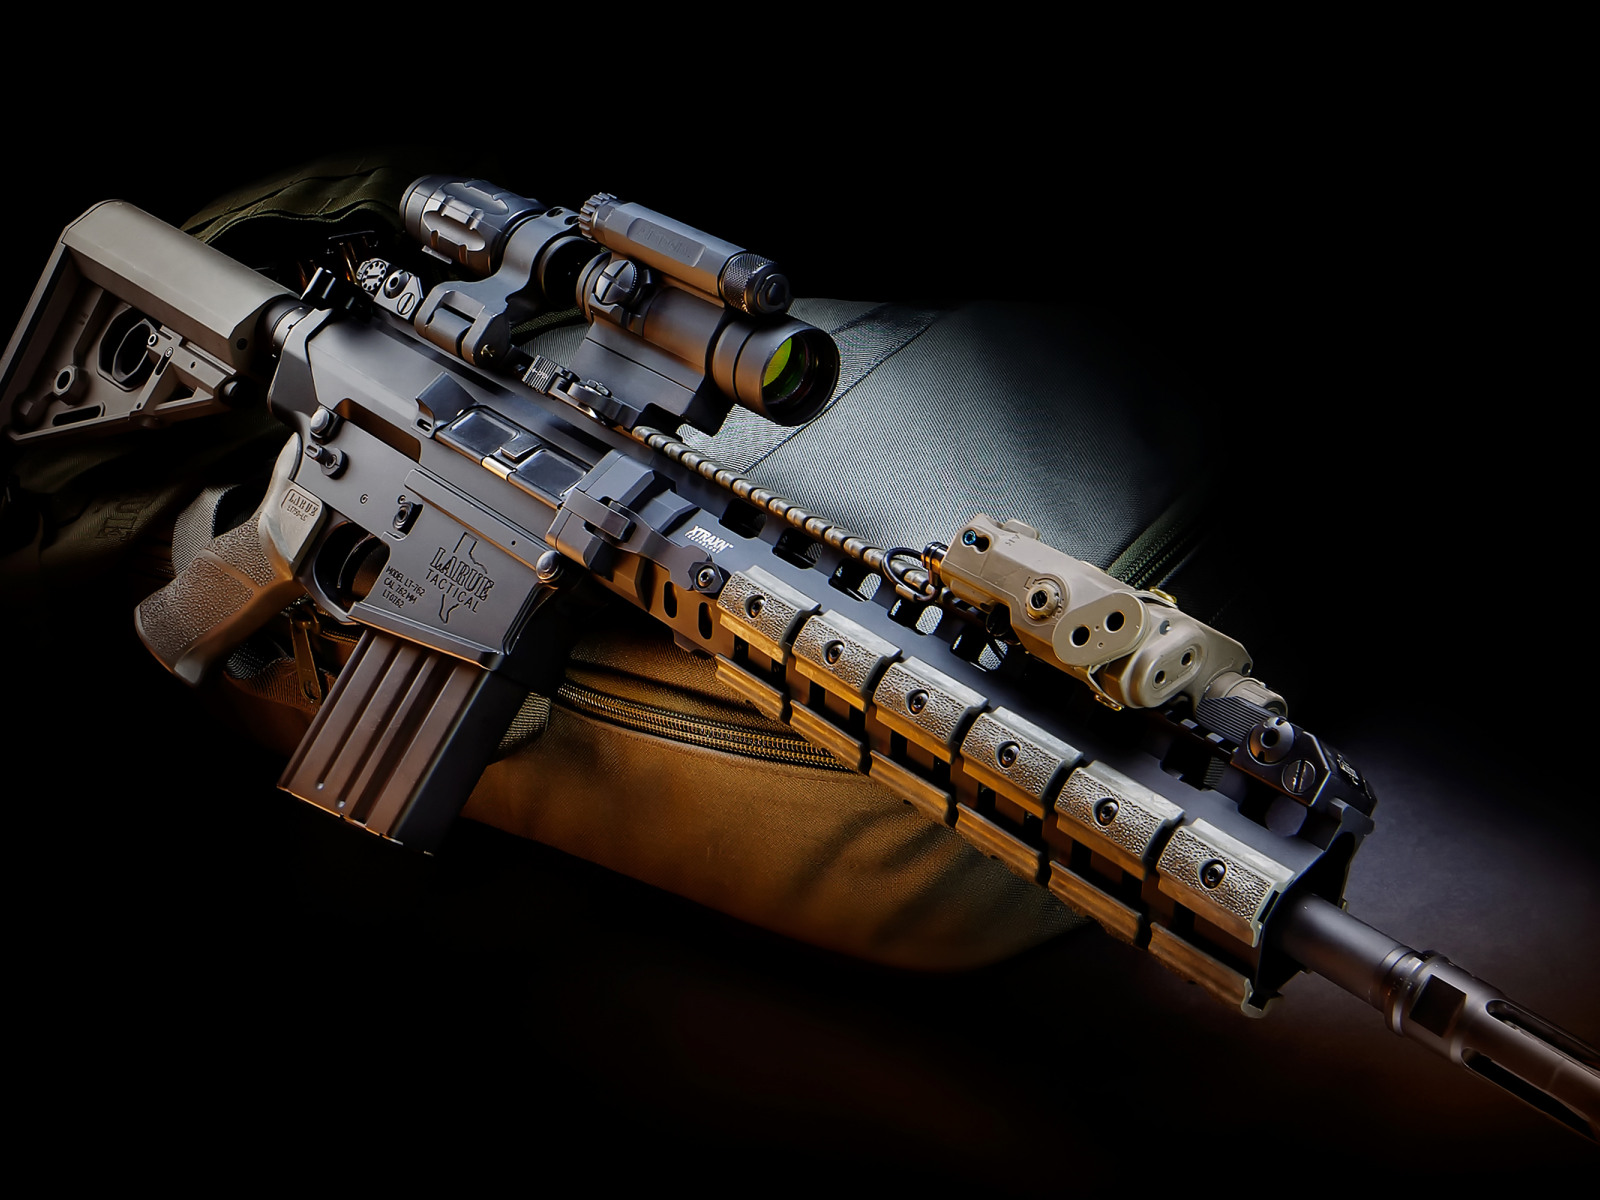 laser system, military, scope, gun, assault rifle